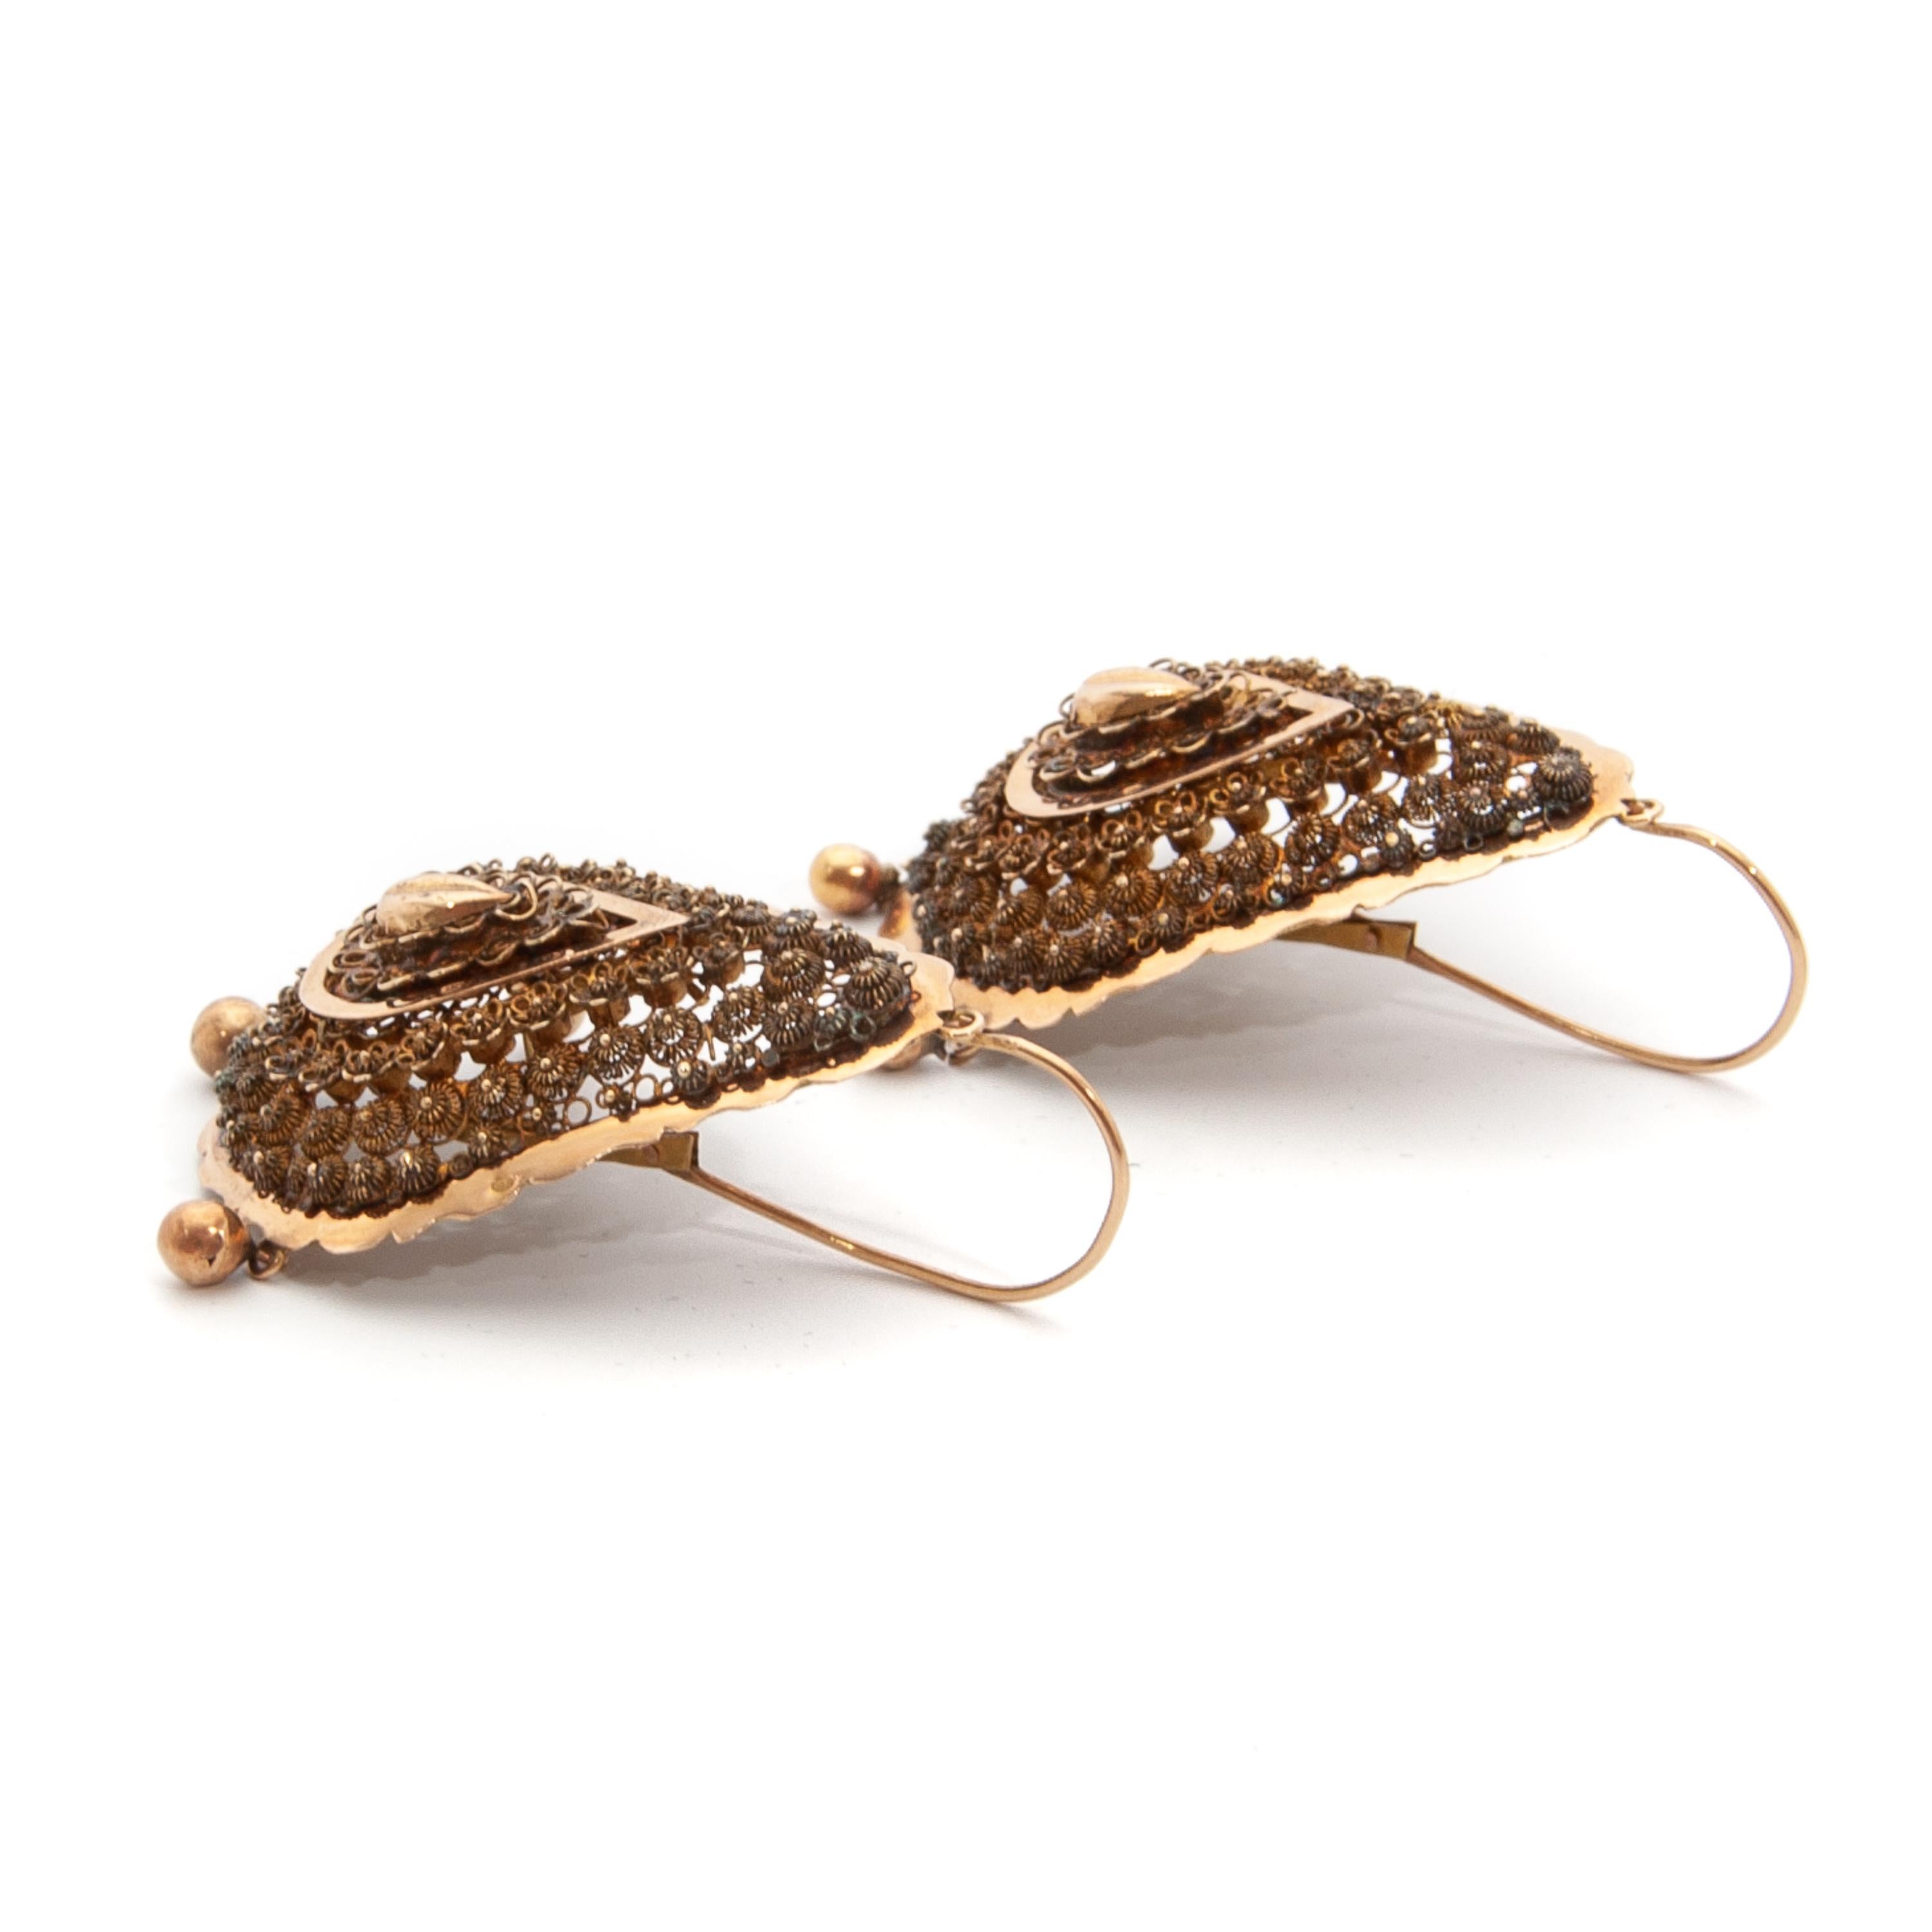 14 karat gold filigree earrings